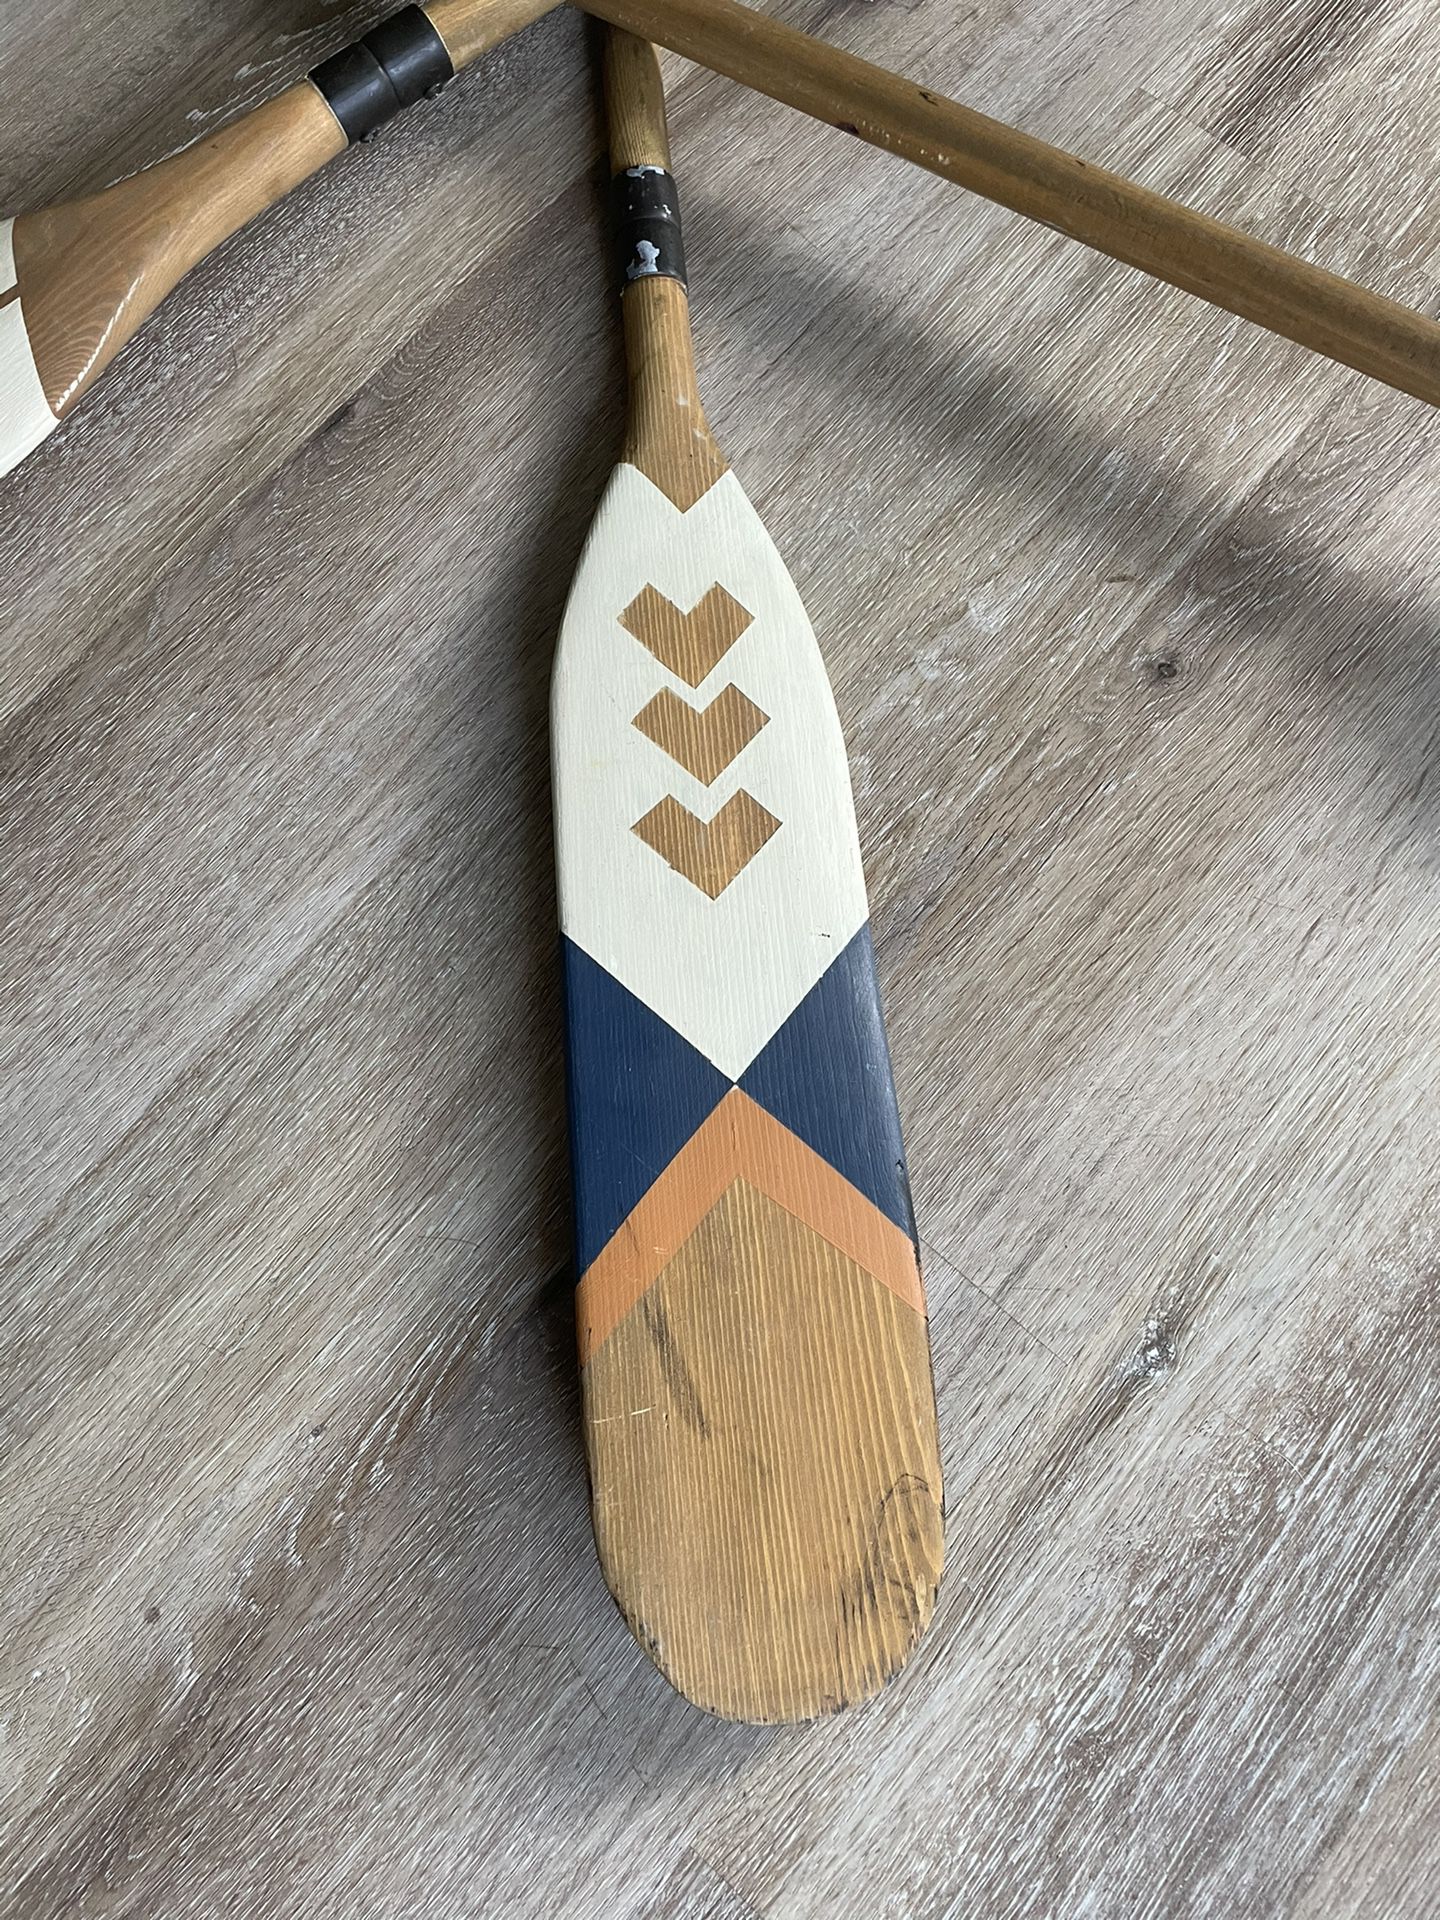 Painted Canoe Paddle SET of 3 ~Jade Feathers~ Hand painted wood canoe paddle, oar, nautical, decor, rustic, lake, decor, wall hanging